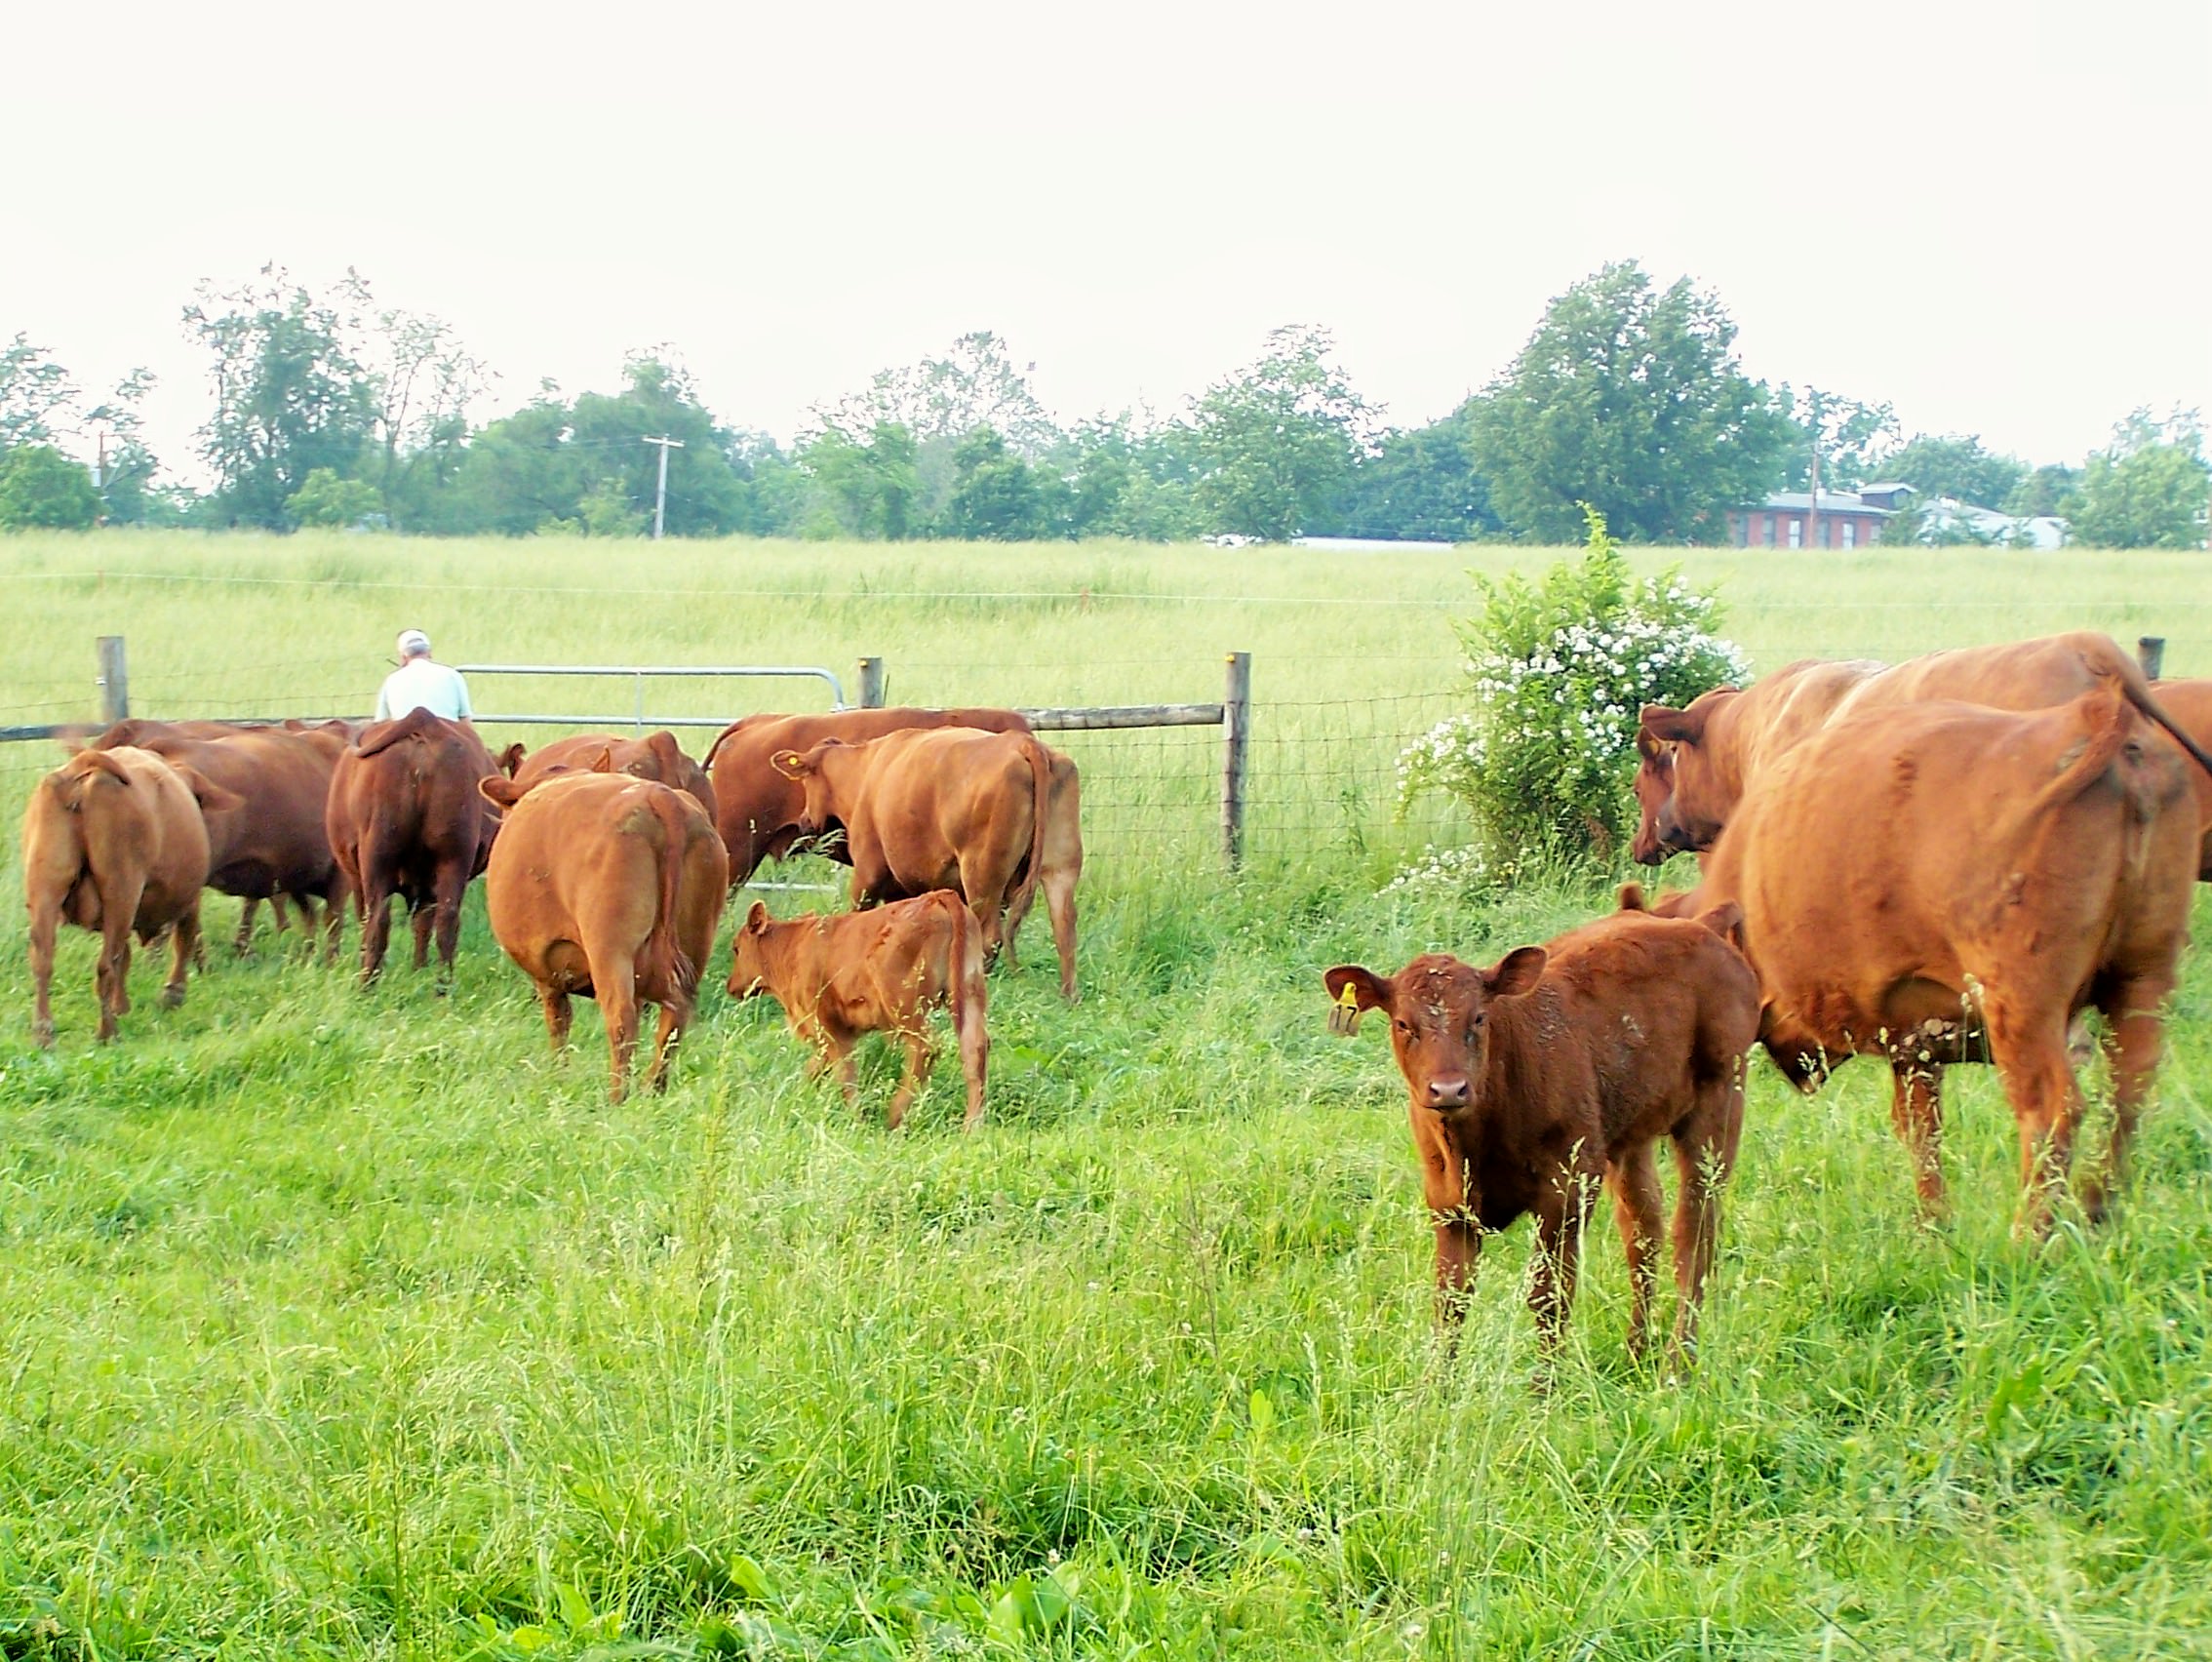 Grass-fed cattle at Tussock Sedge Farm in Blooming Glen, Bucks County